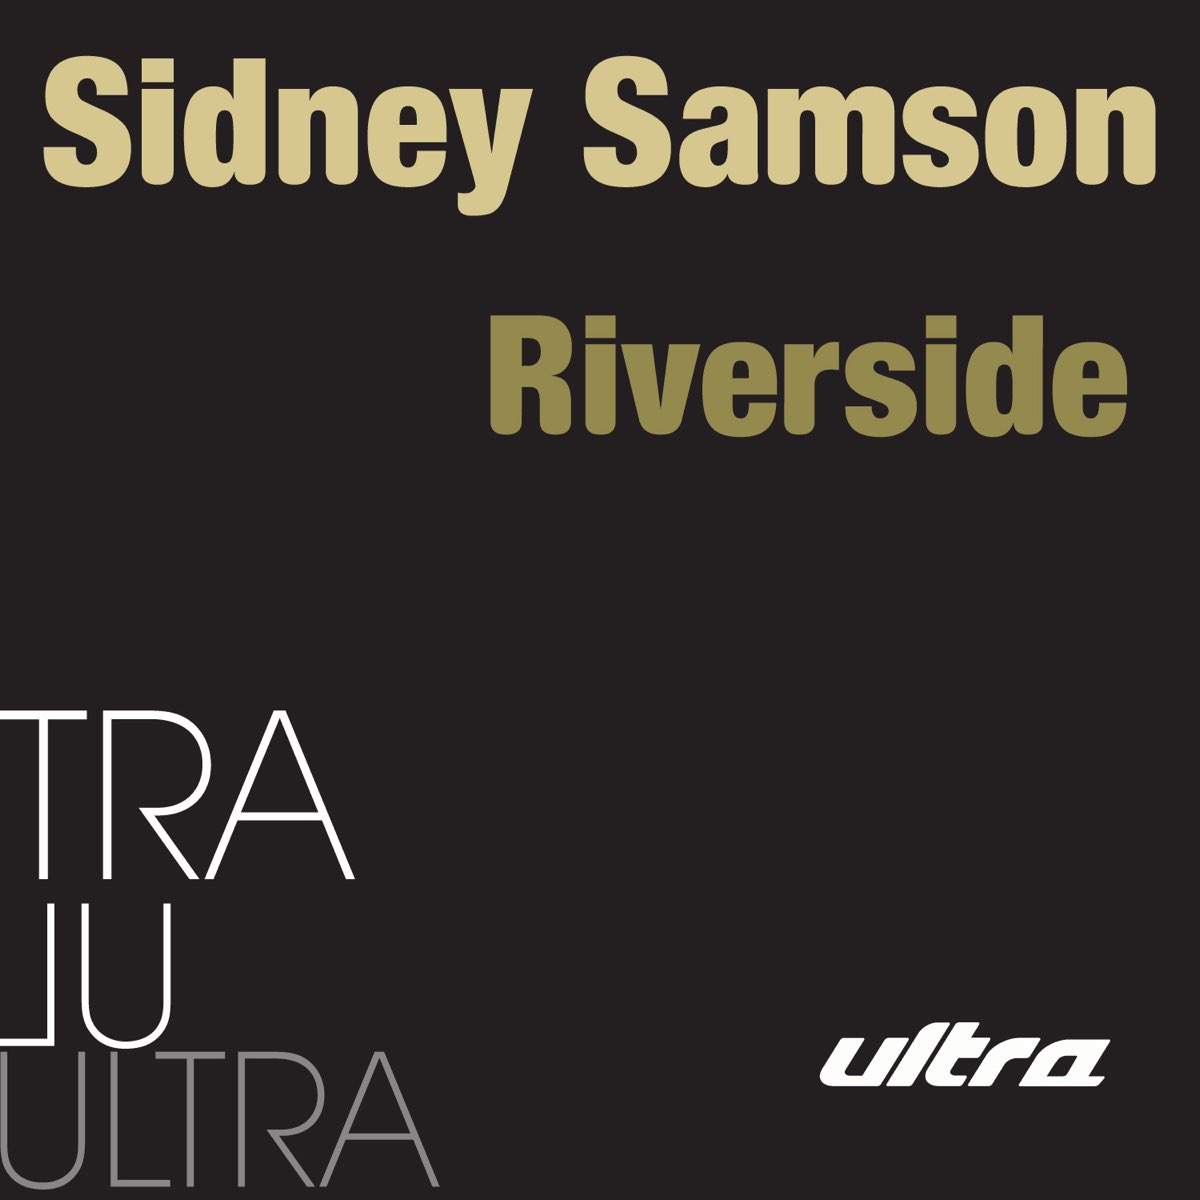 Sidney Samson Riverside. Sidney Samson feat Wizard Sleeve. Lets go Samson. Sidney Samson Wizard Sleeve Riverside models name. Riverside 2099 oliver heldens sidney samson